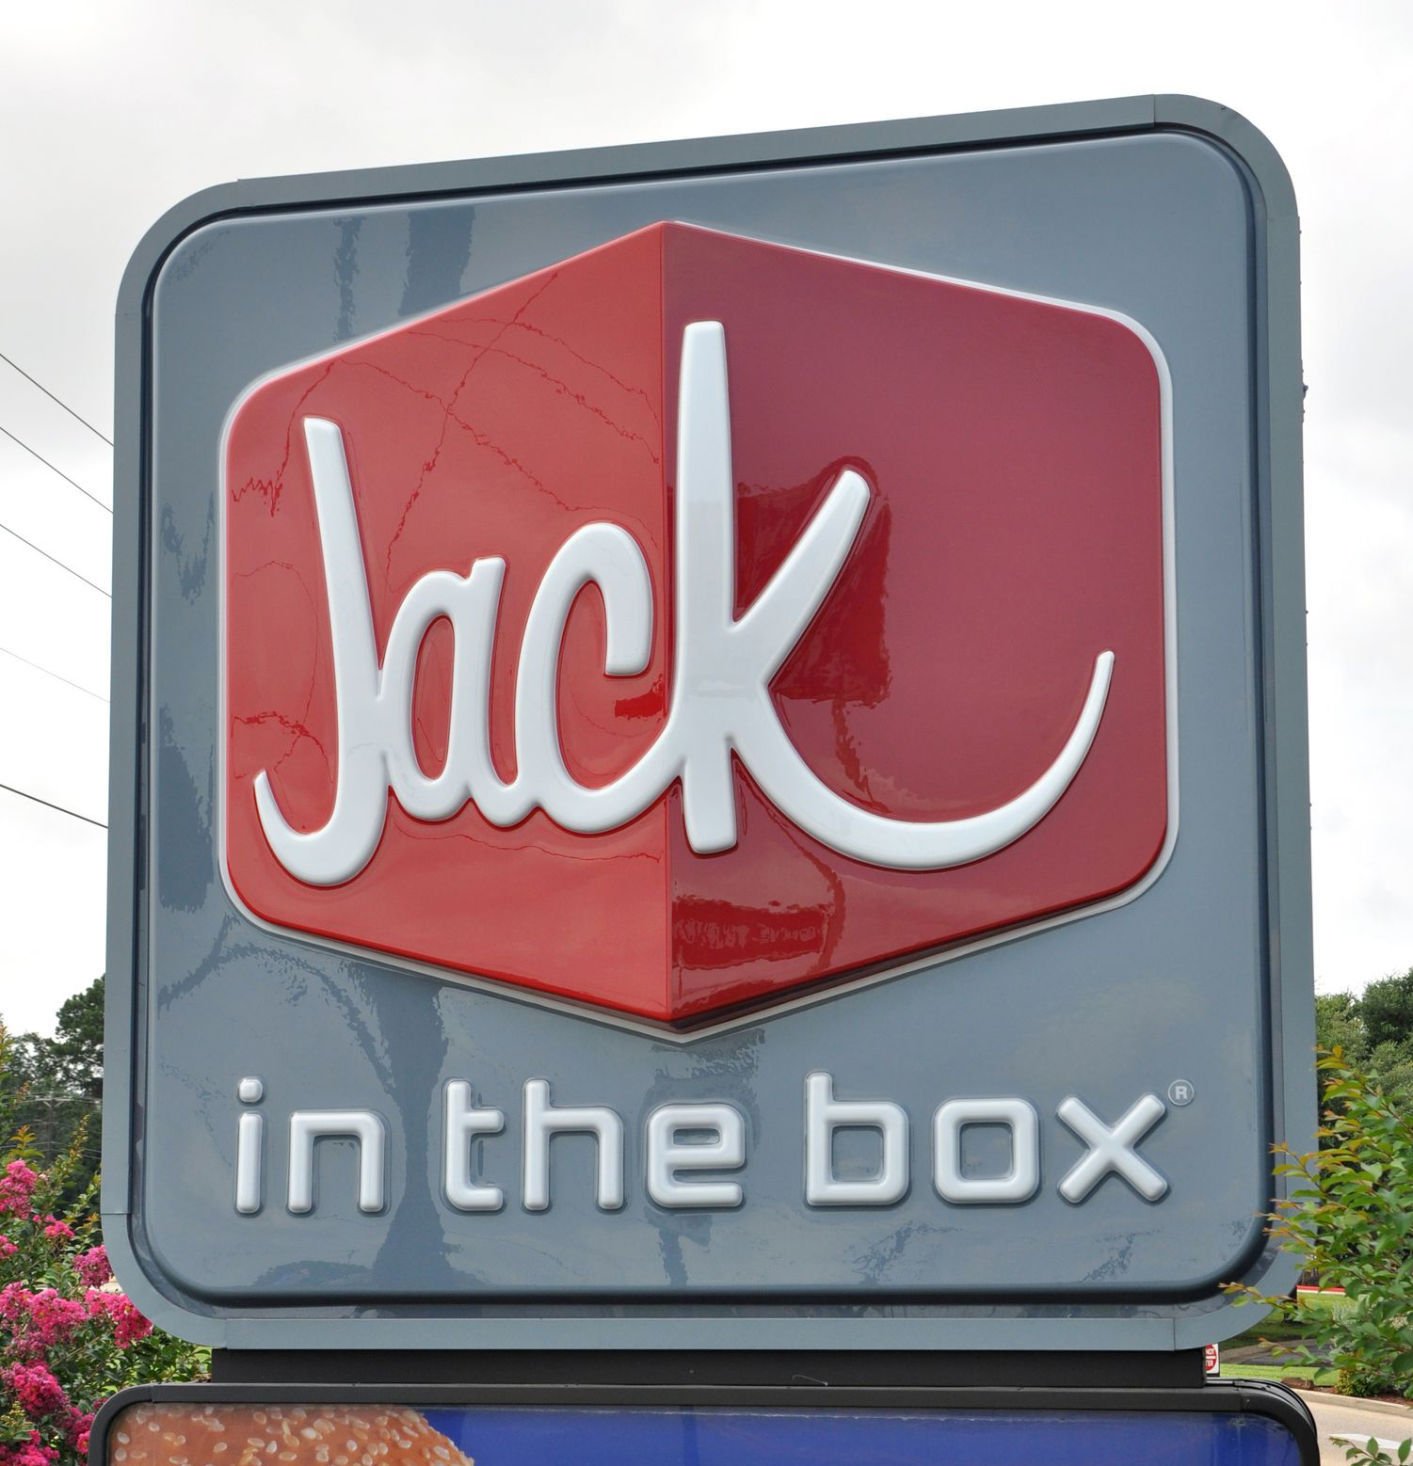 jack box